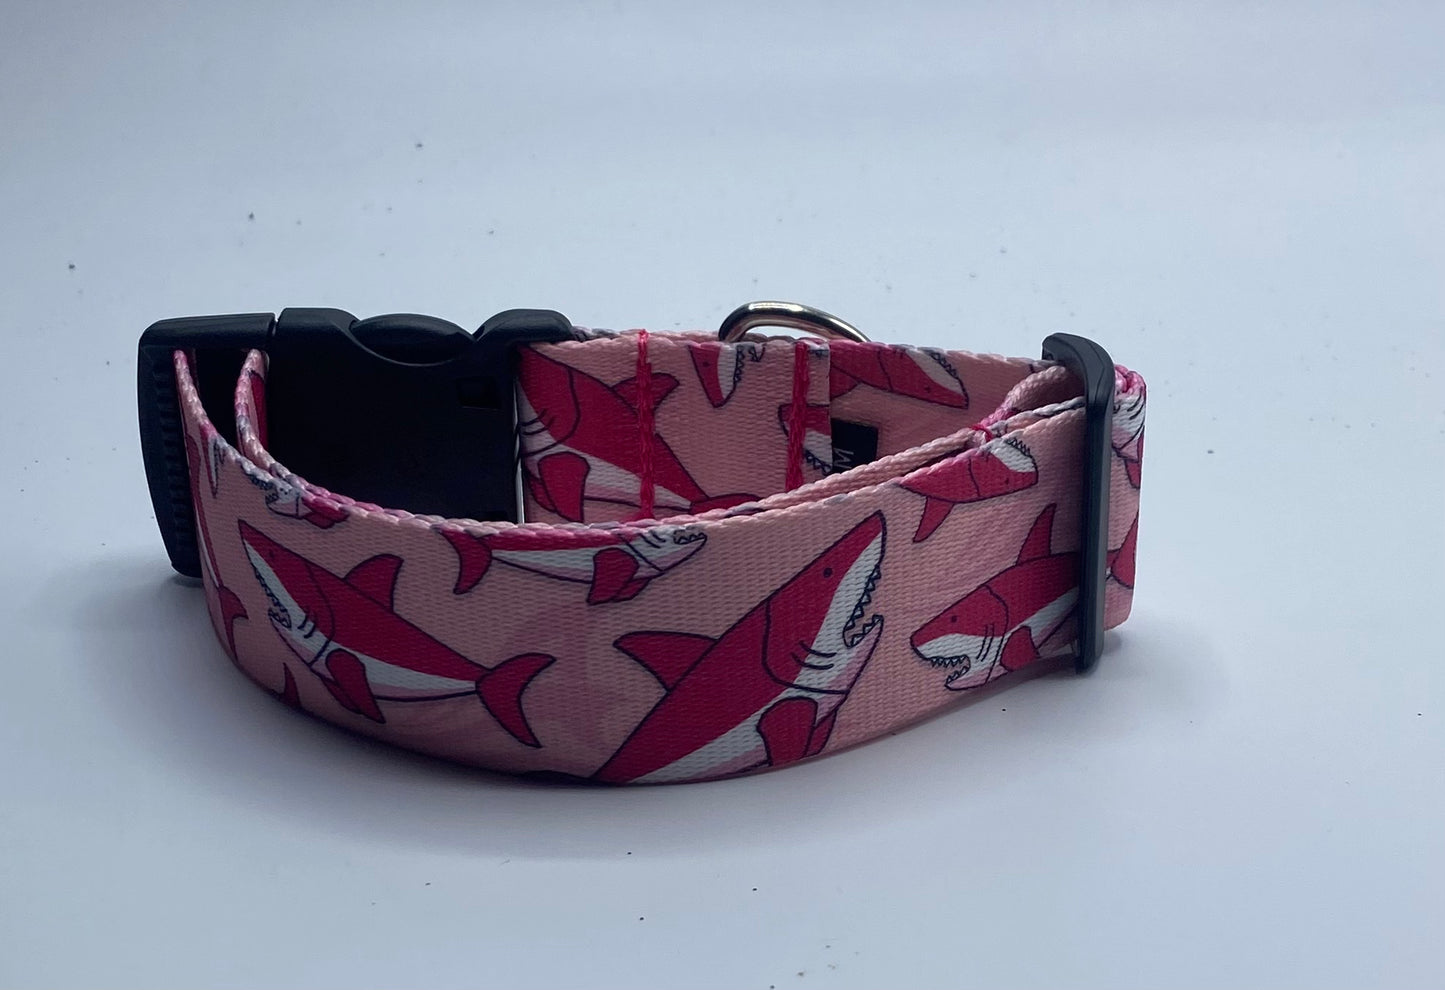 Pink Sharks Nylon Dog Collar (1.5" Wide)